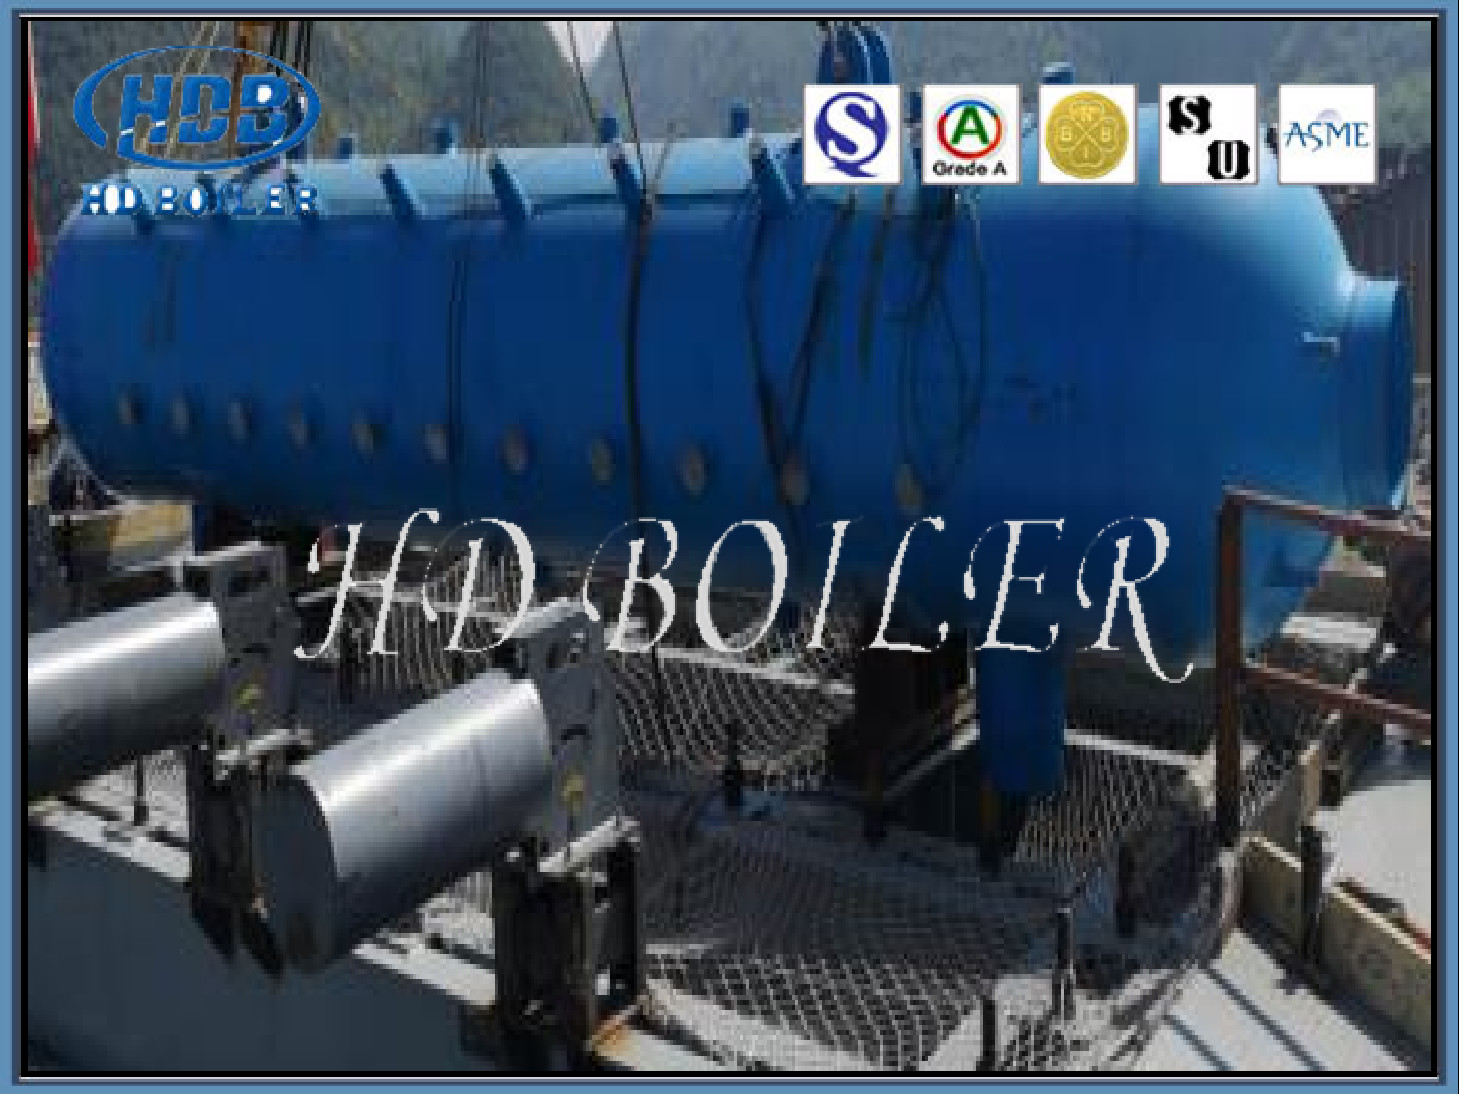 Carbon Steel Boiler Mud Drum For Industrial Boilers And Boilers Of Thermal Power Plant